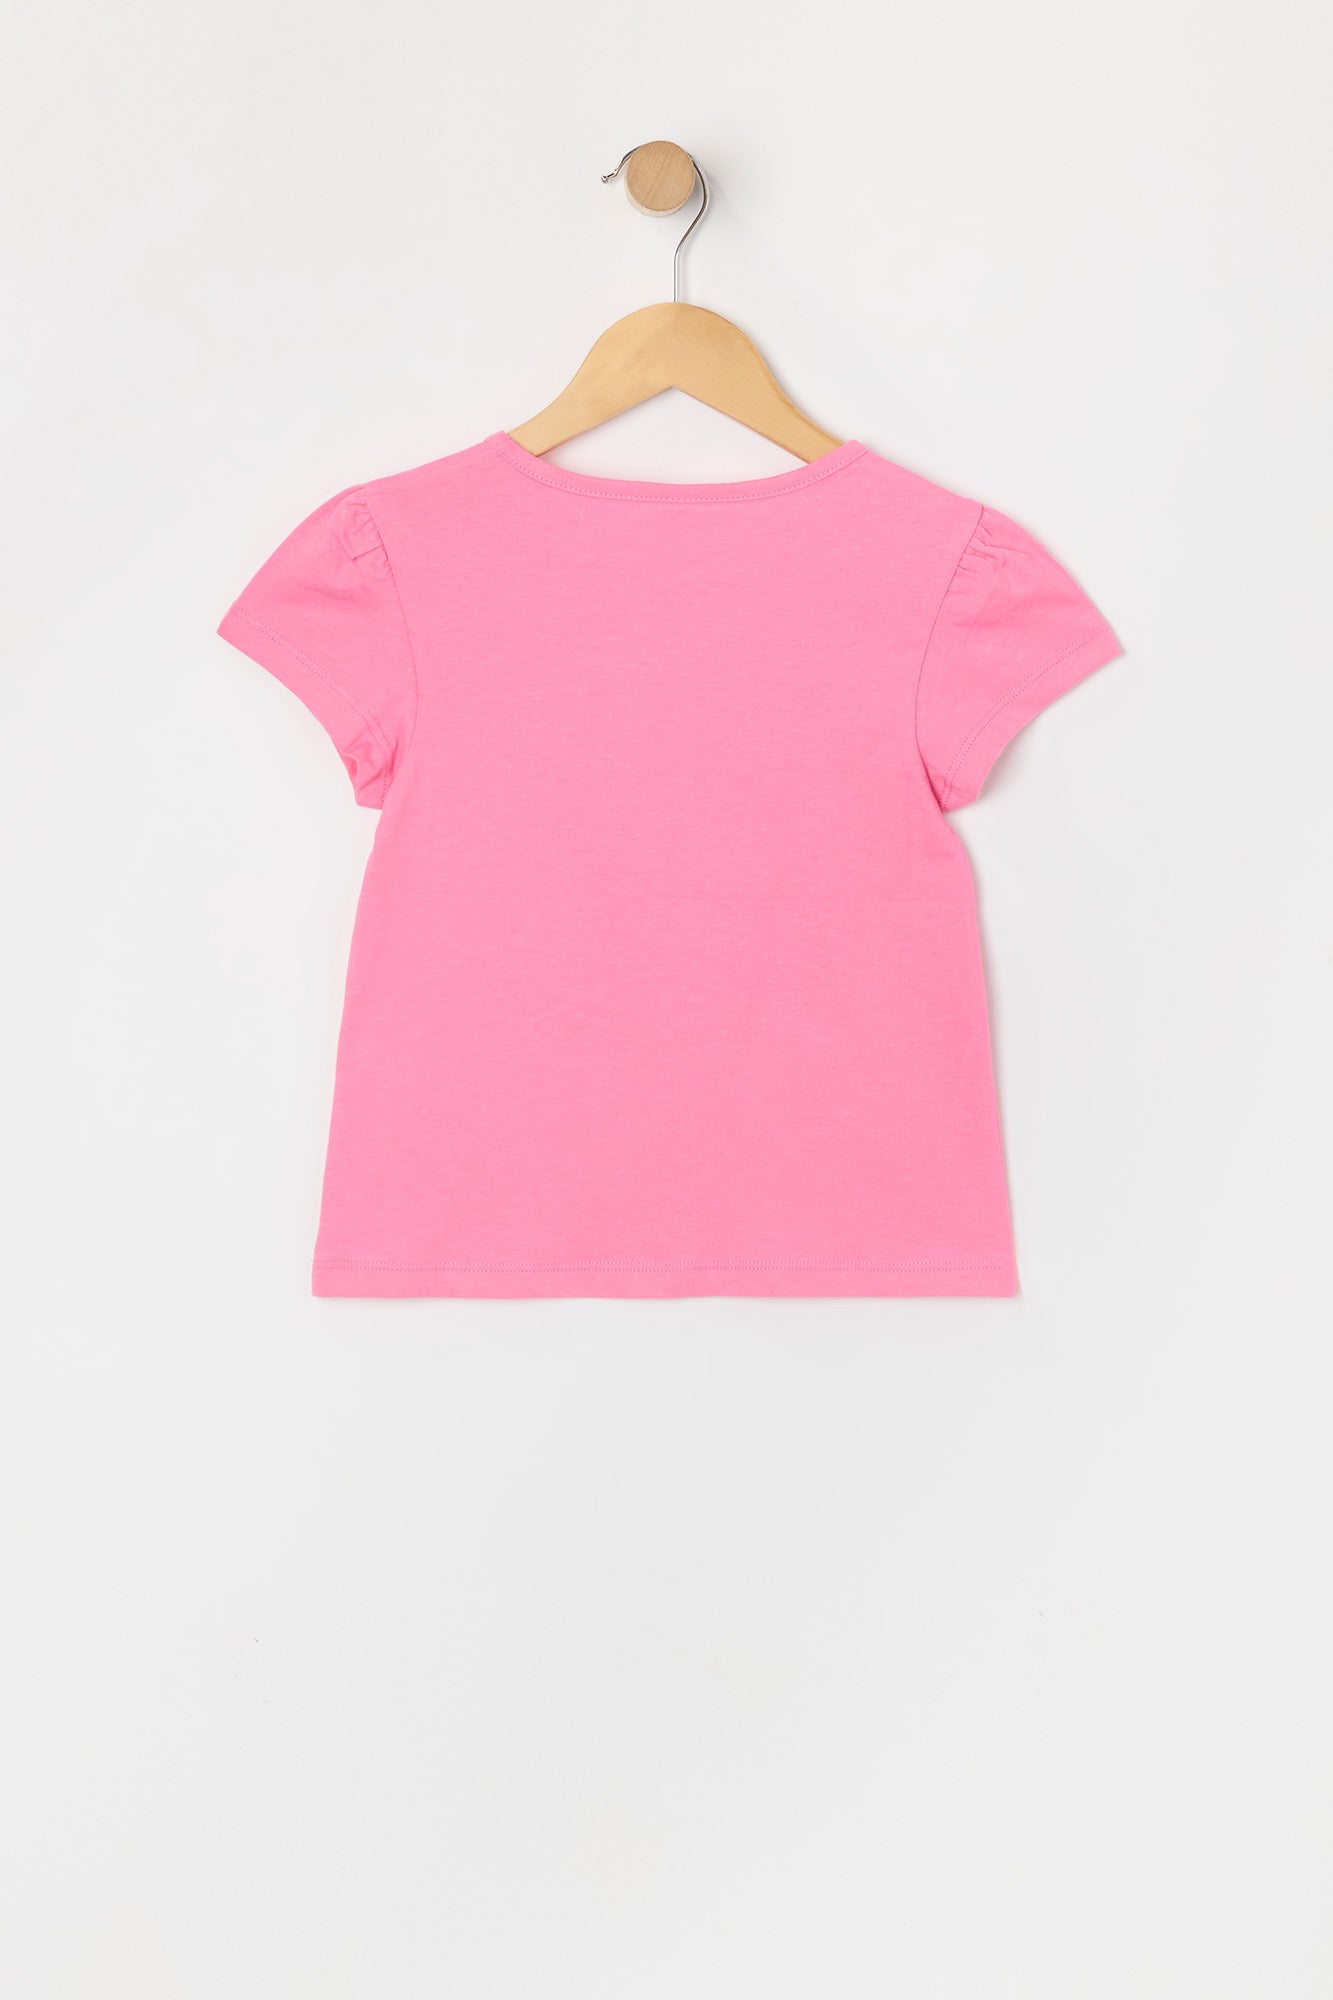 Toddler Girl Little Miss Sunshine Graphic Puff Sleeve T-Shirt